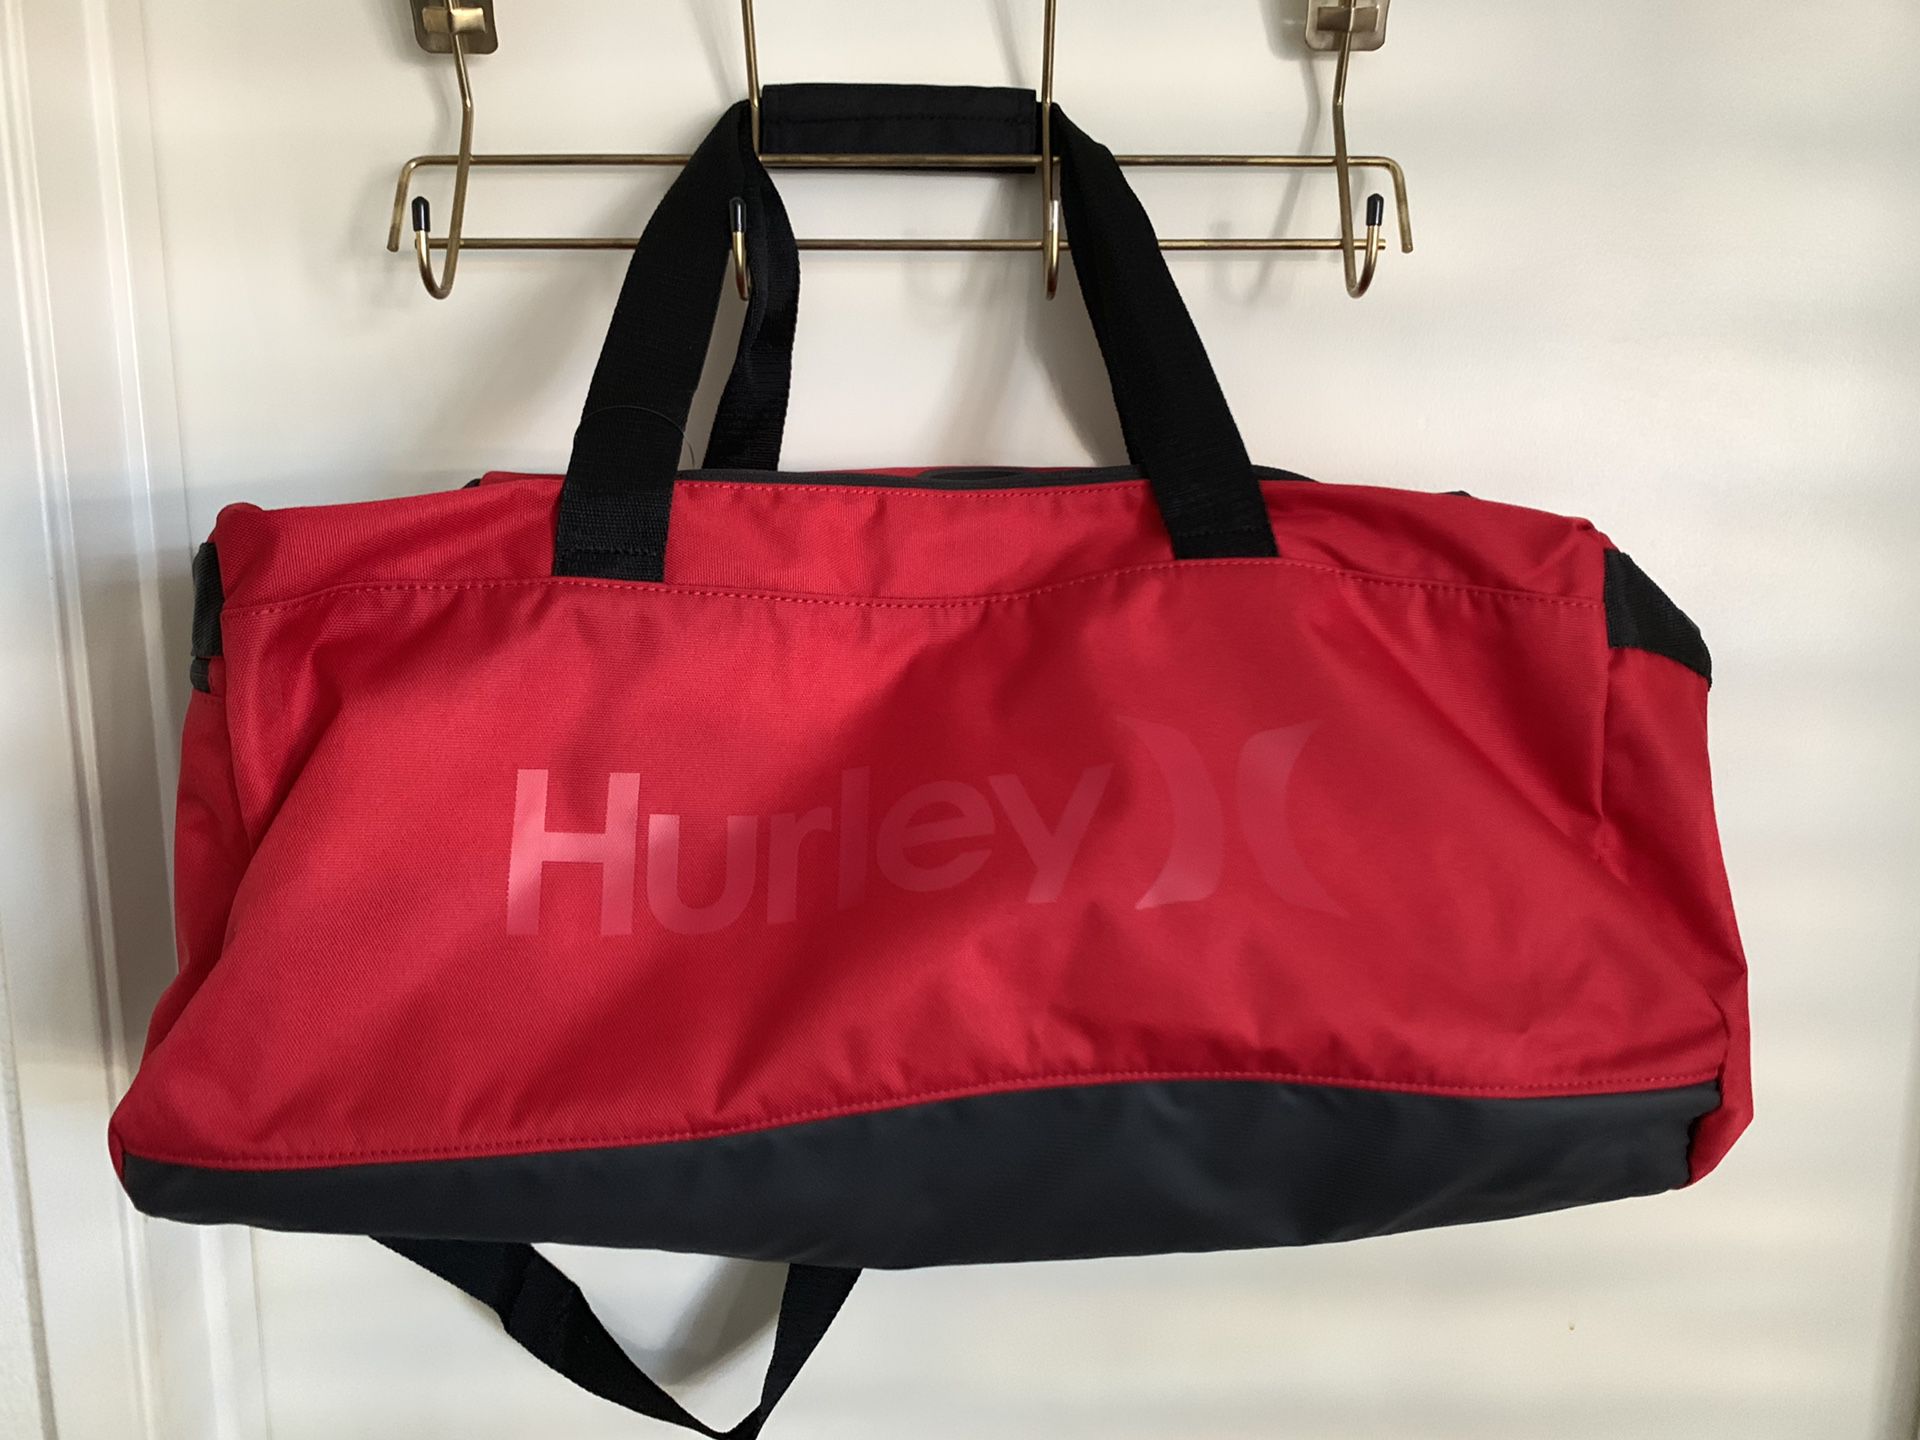 Hurley Duffle Bag